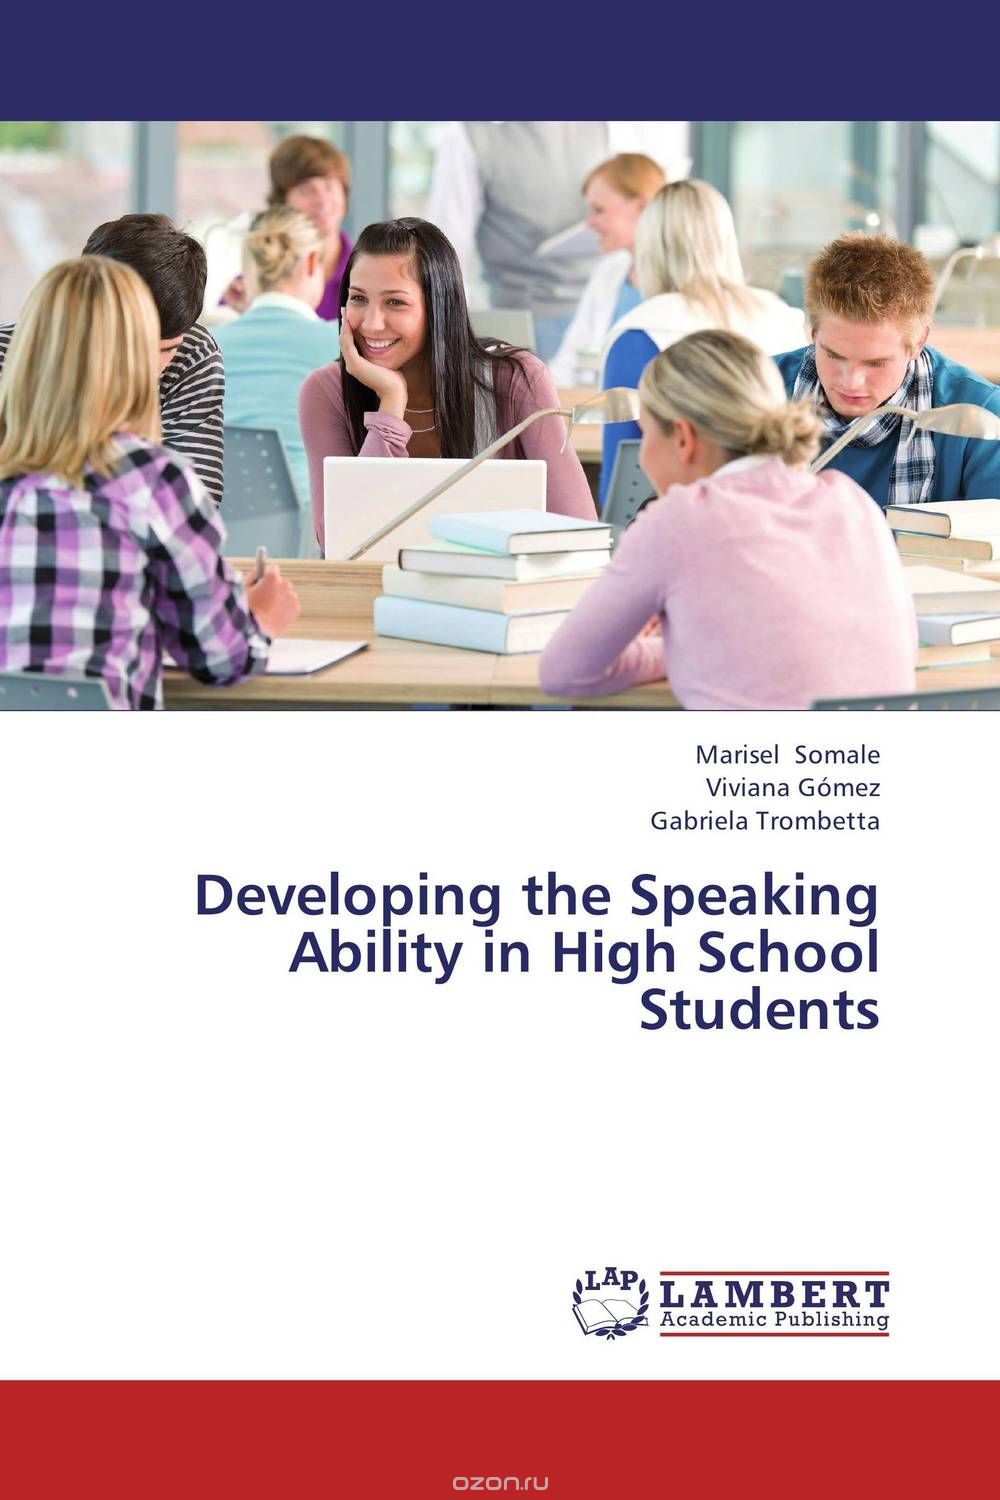 Скачать книгу "Developing the Speaking Ability in High School Students"